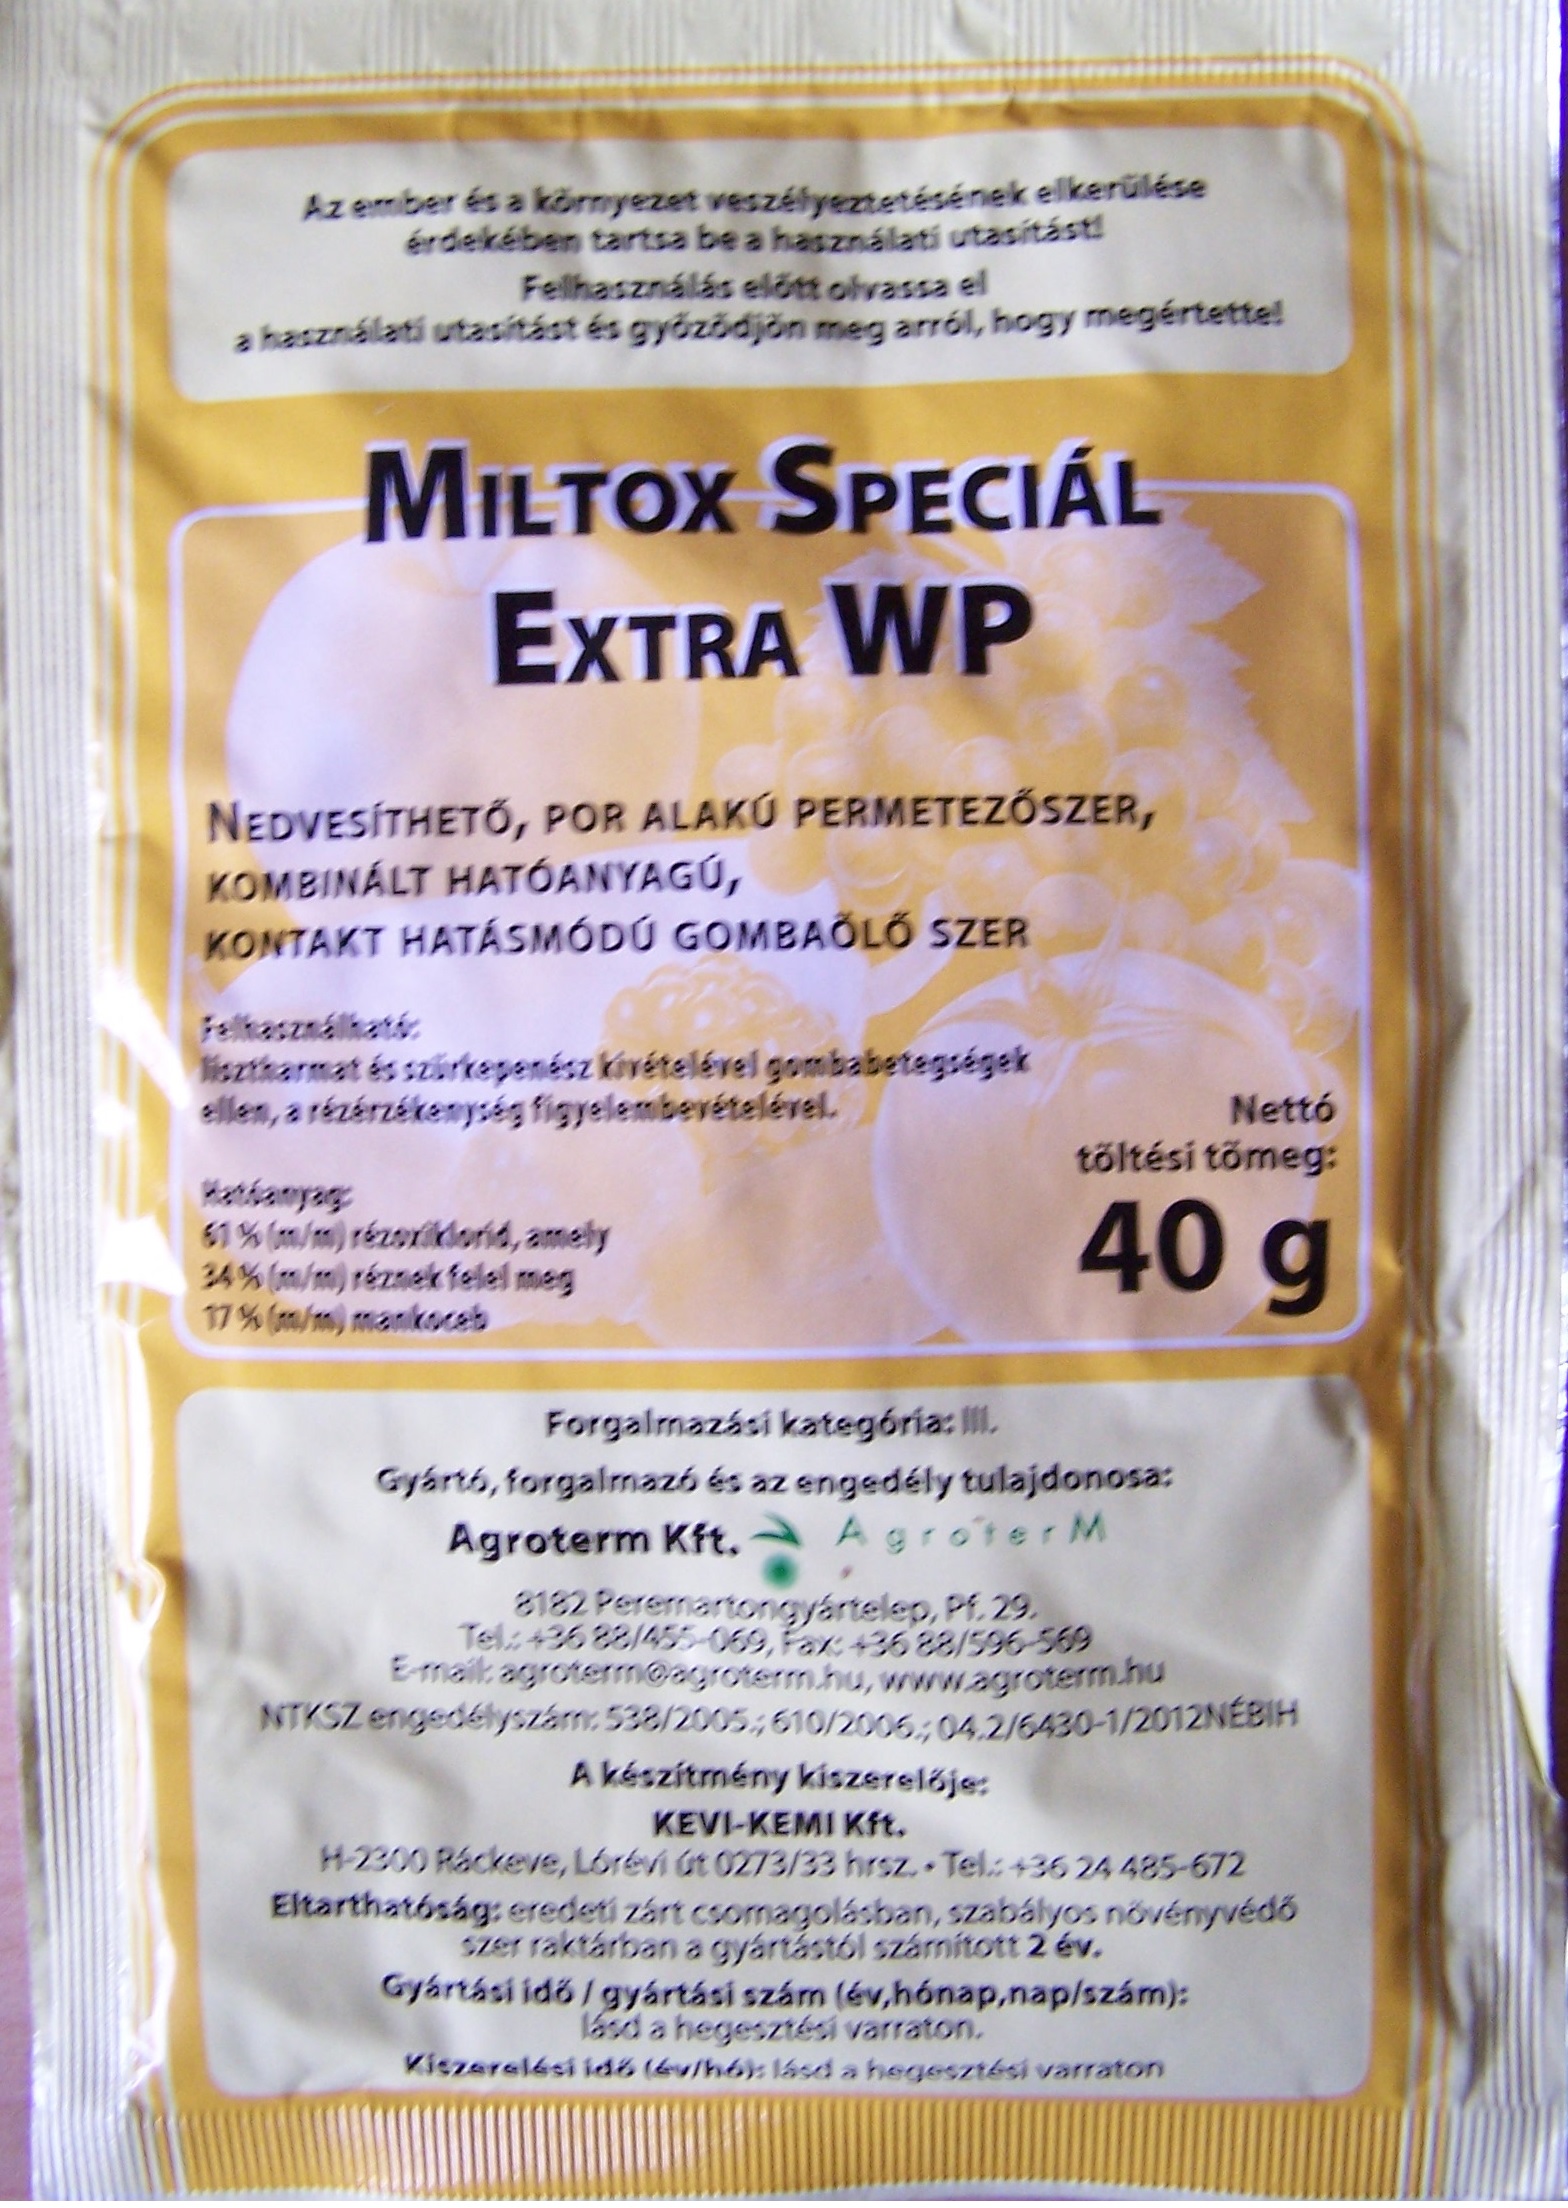 Miltox special extra 40 g